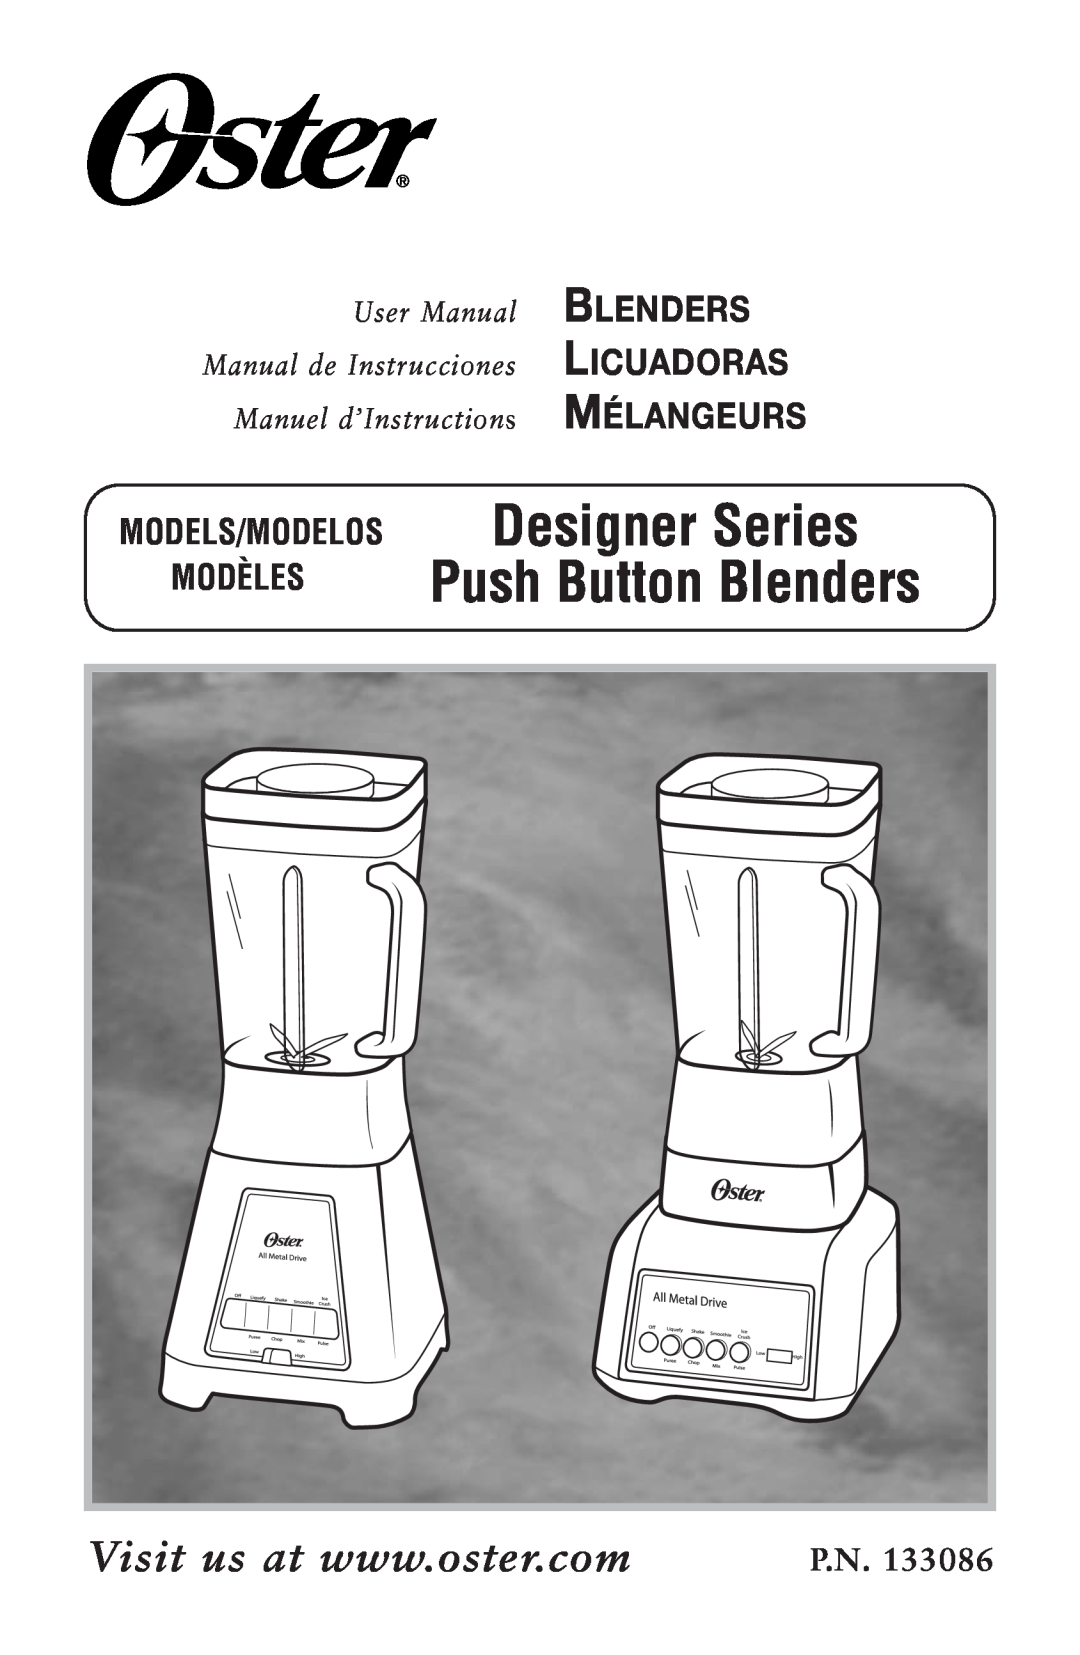 Oster 133086 user manual Blenders Licuadoras Mélangeurs, Designer Series Push Button Blenders, Modèles, Models/Modelos 